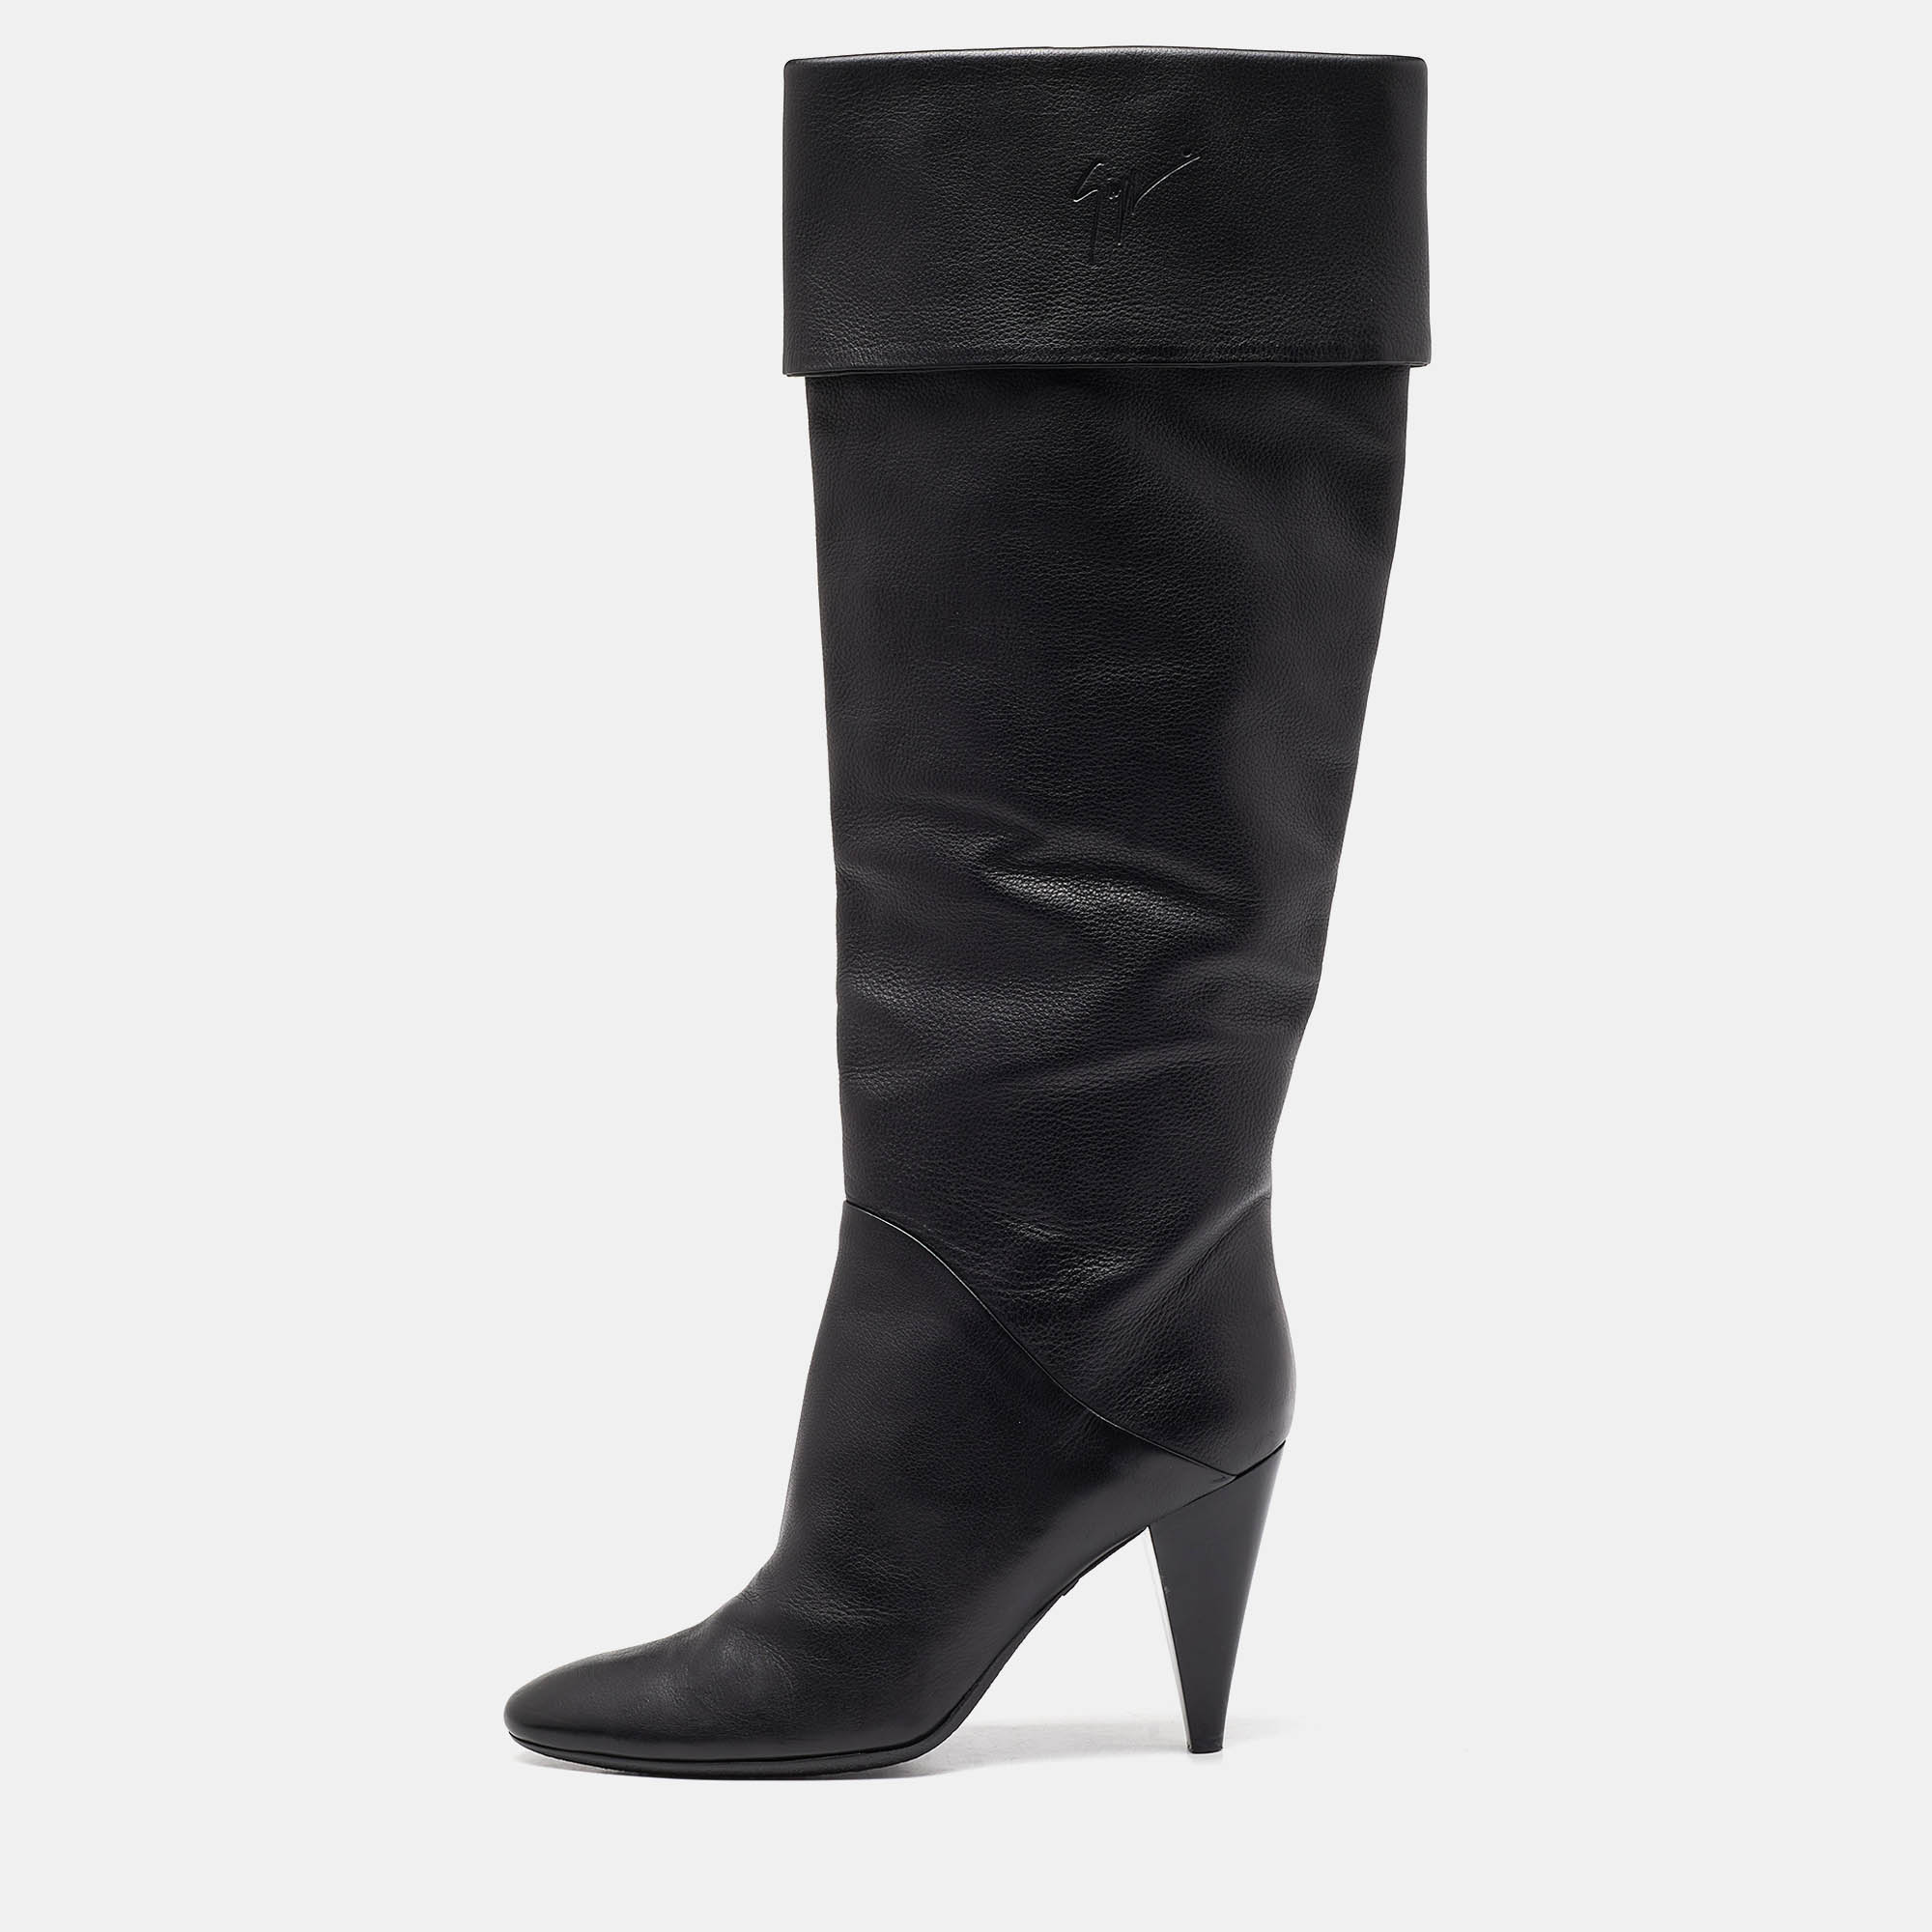 Giuseppe zanotti black leather knee length boots size 40